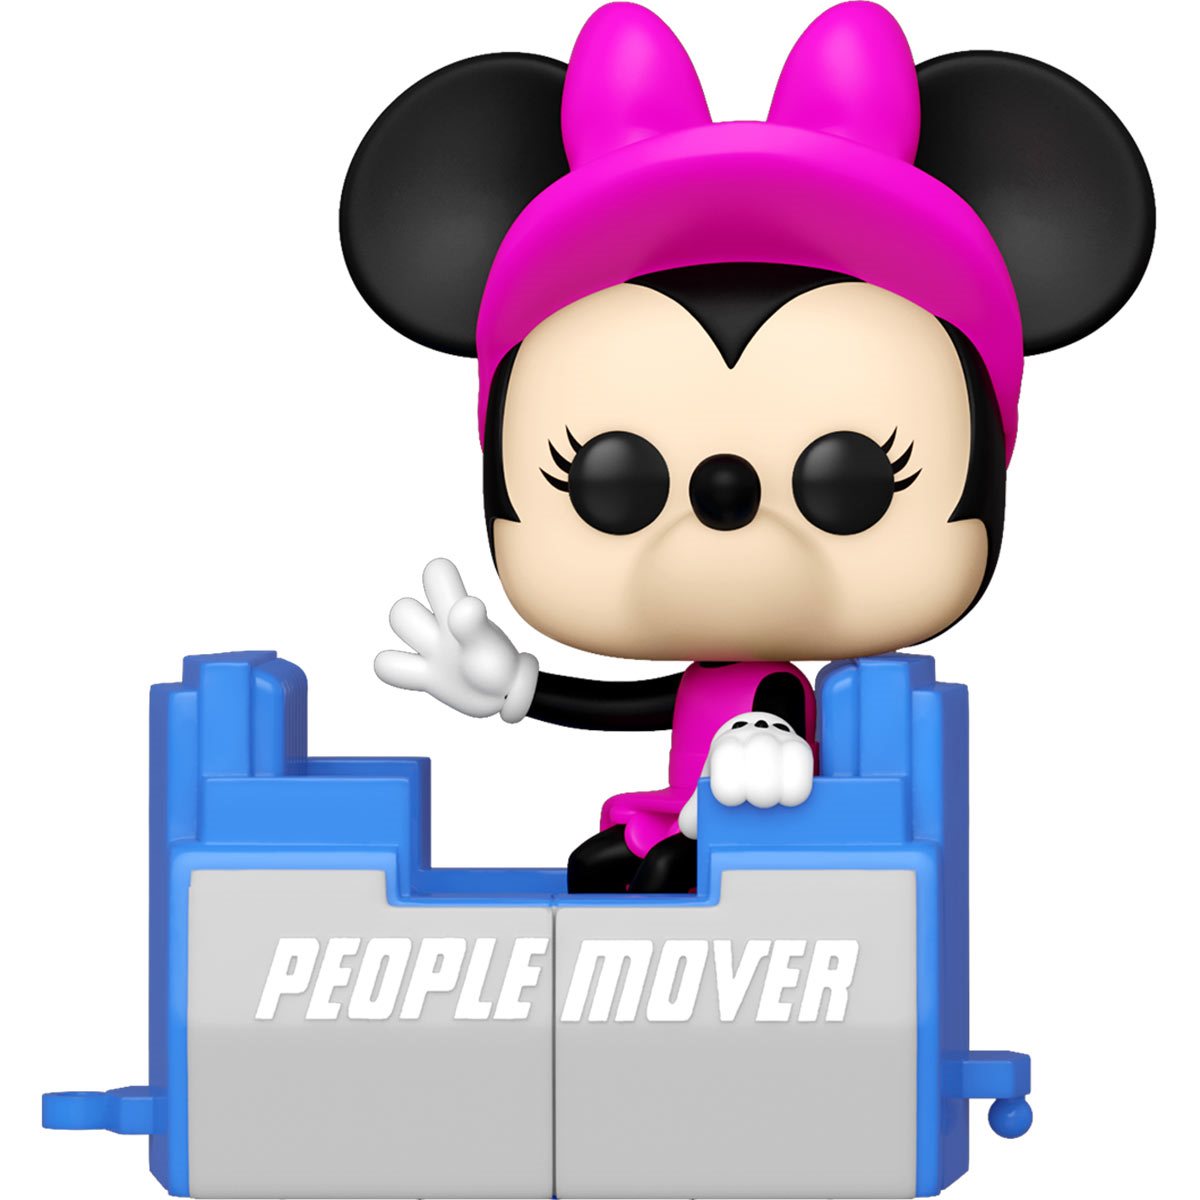 Funko Pop Disney: Walt Disney World 50 Aniversario - People Mover Minnie